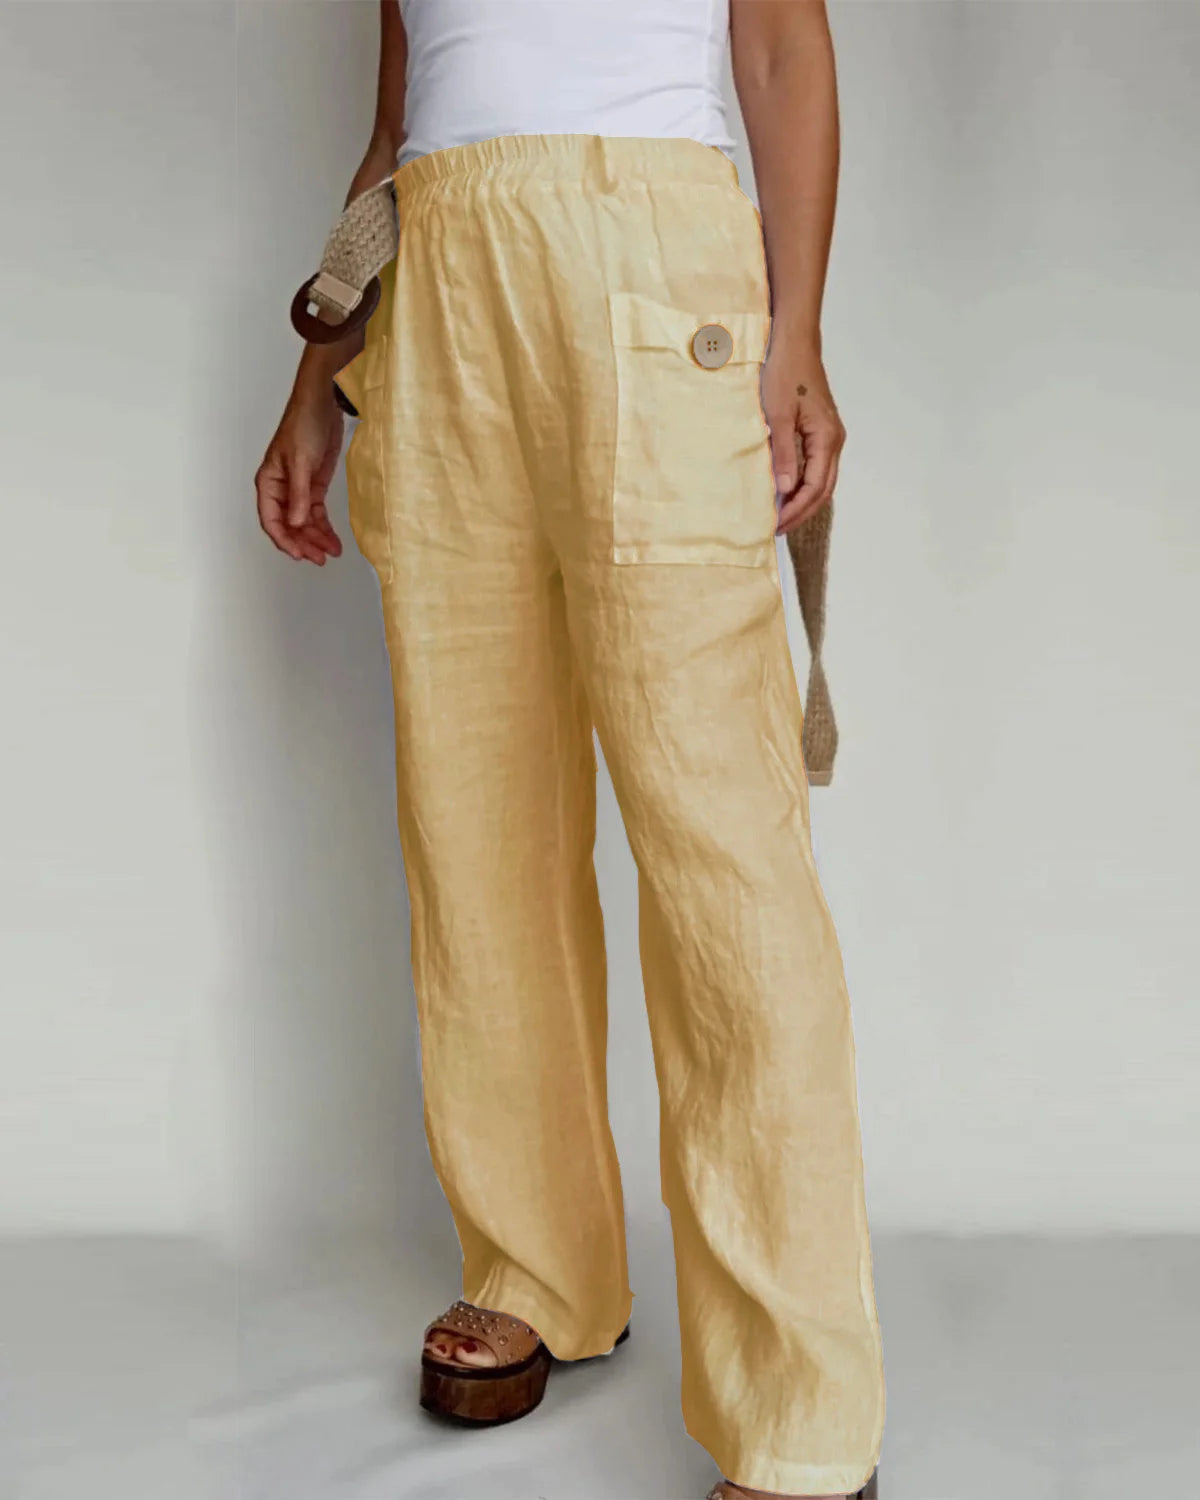 Cotton linen casual pants home trousers